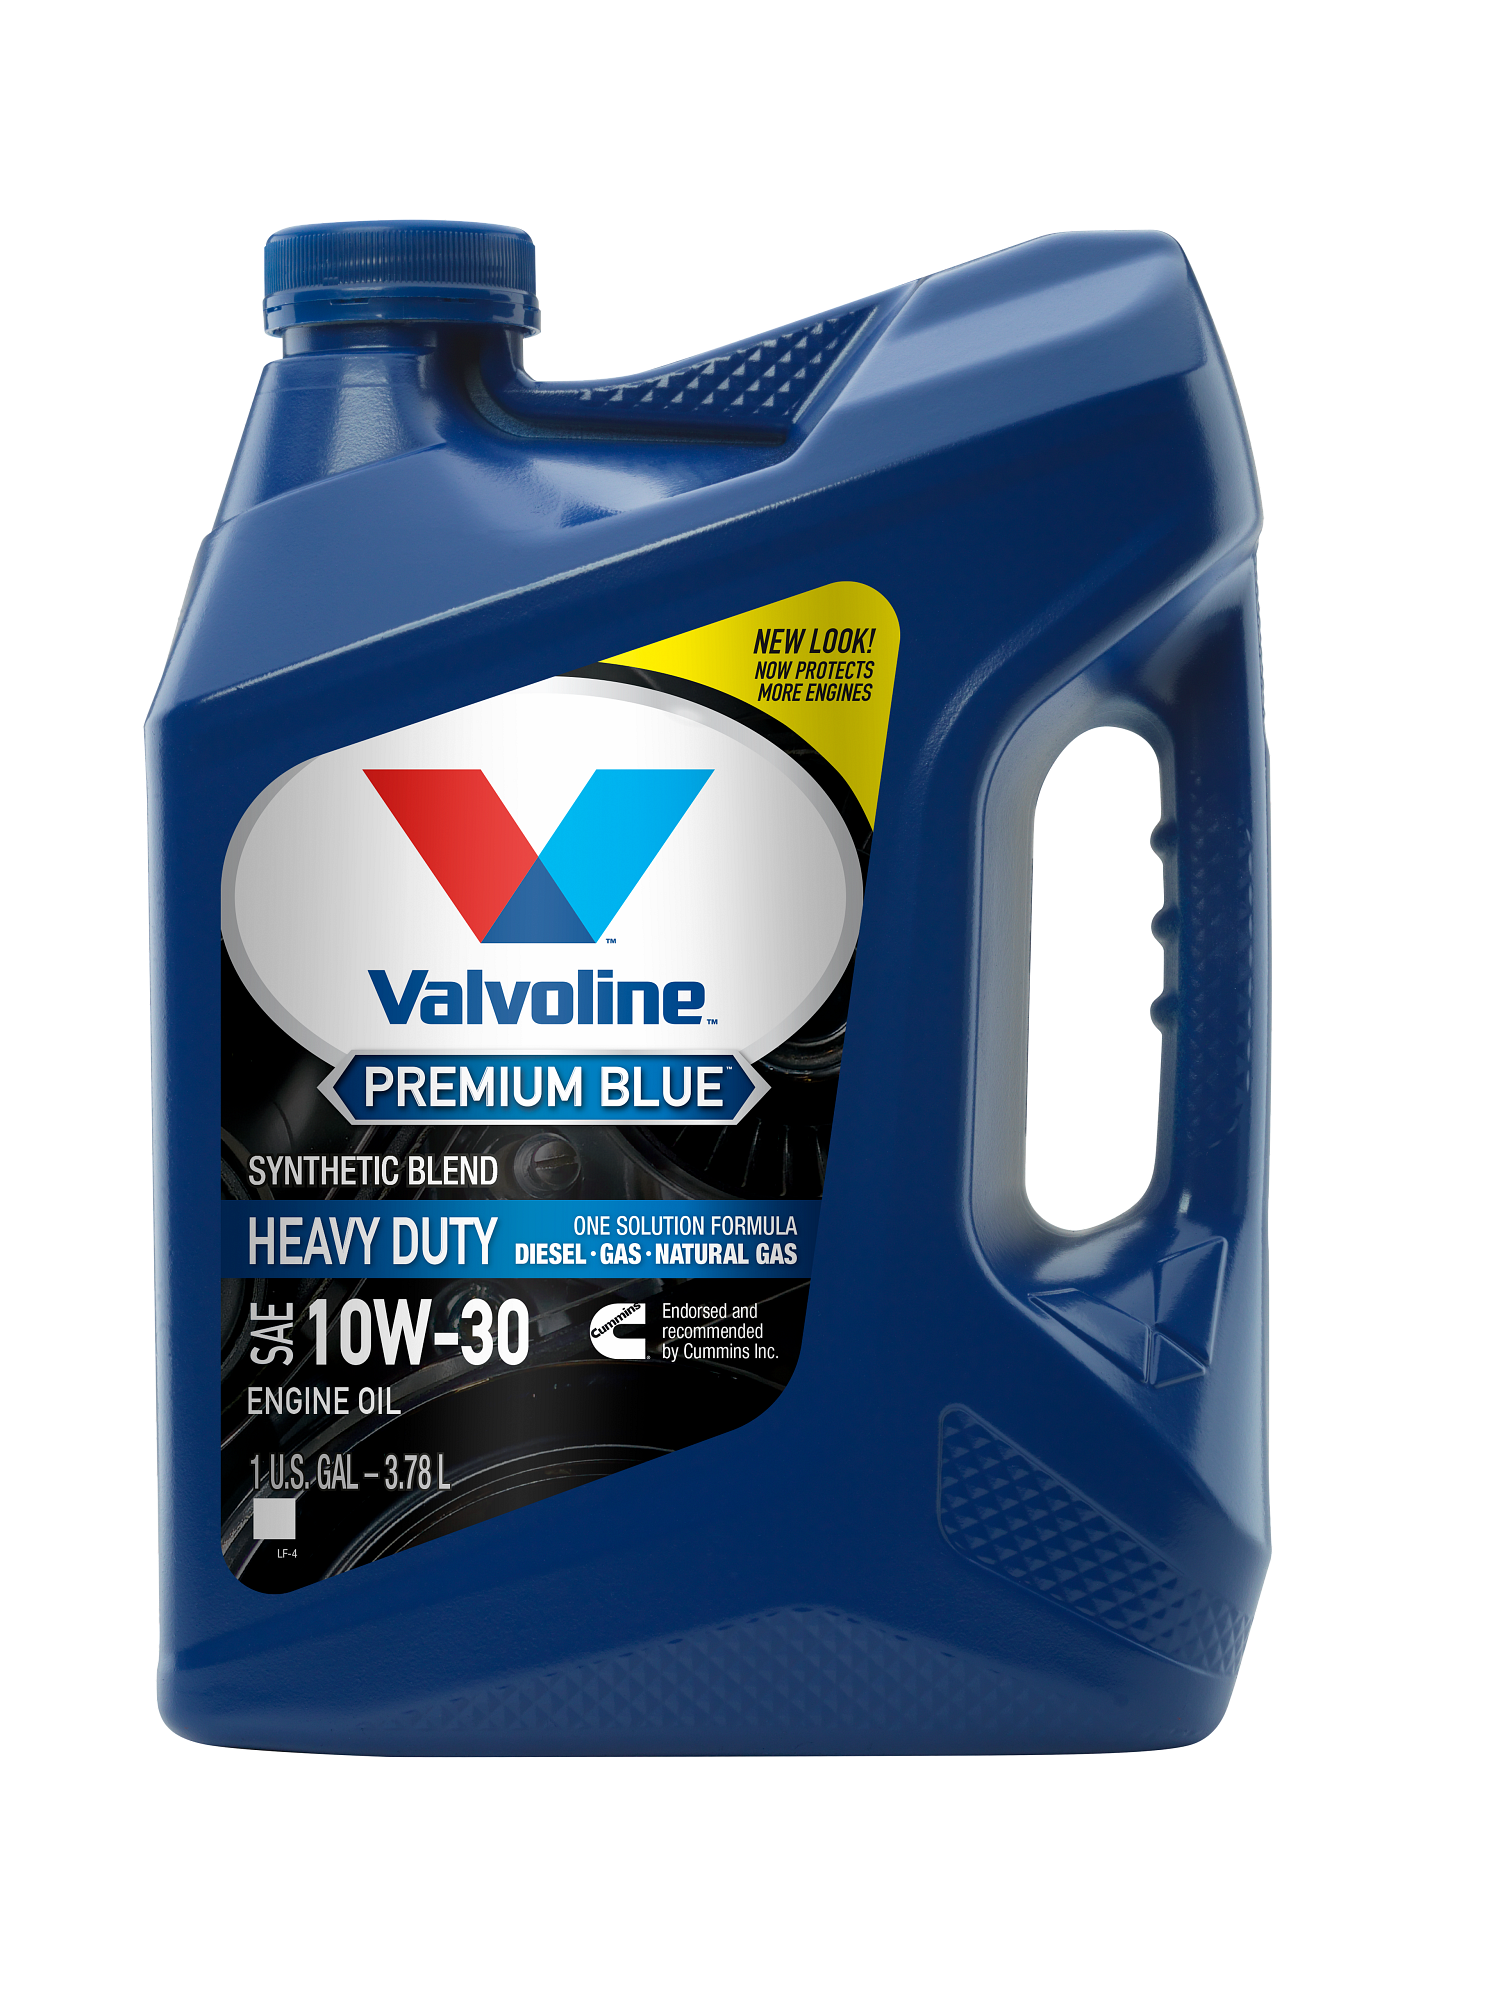 Valvoline优质蓝色合成油